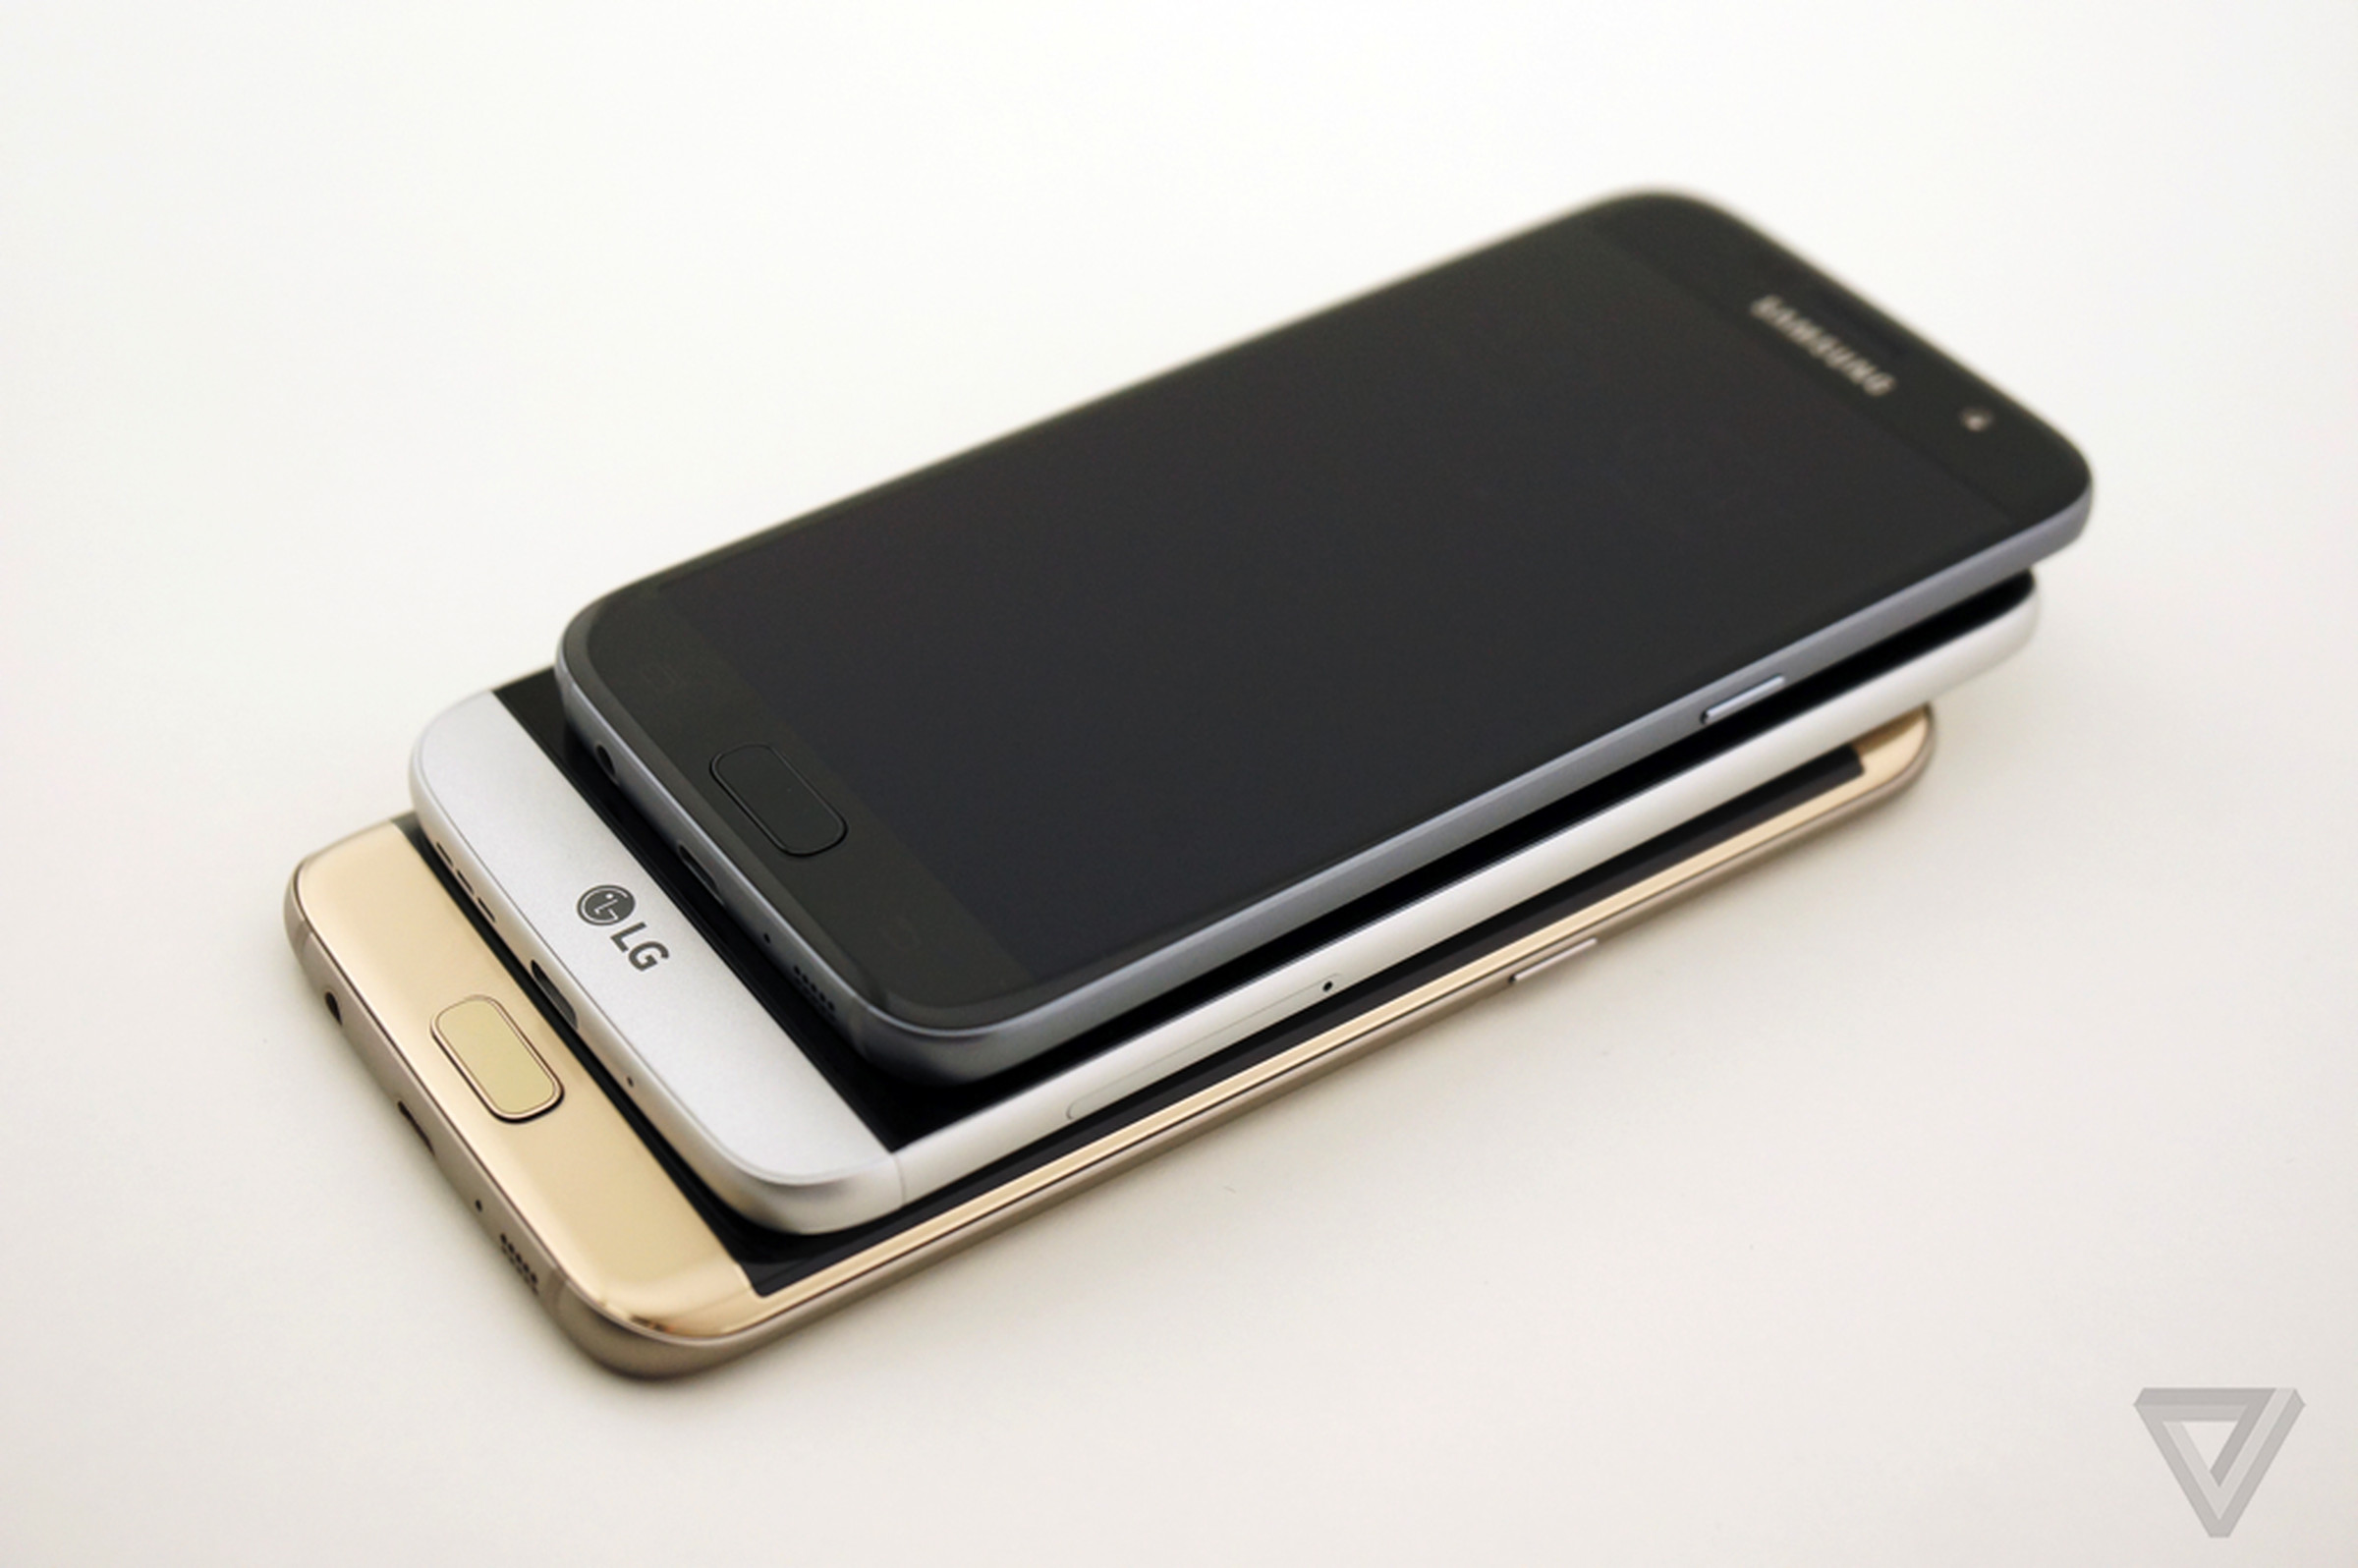 Samsung Galaxy S7 and S7 Edge vs. LG G5 hands-on photos